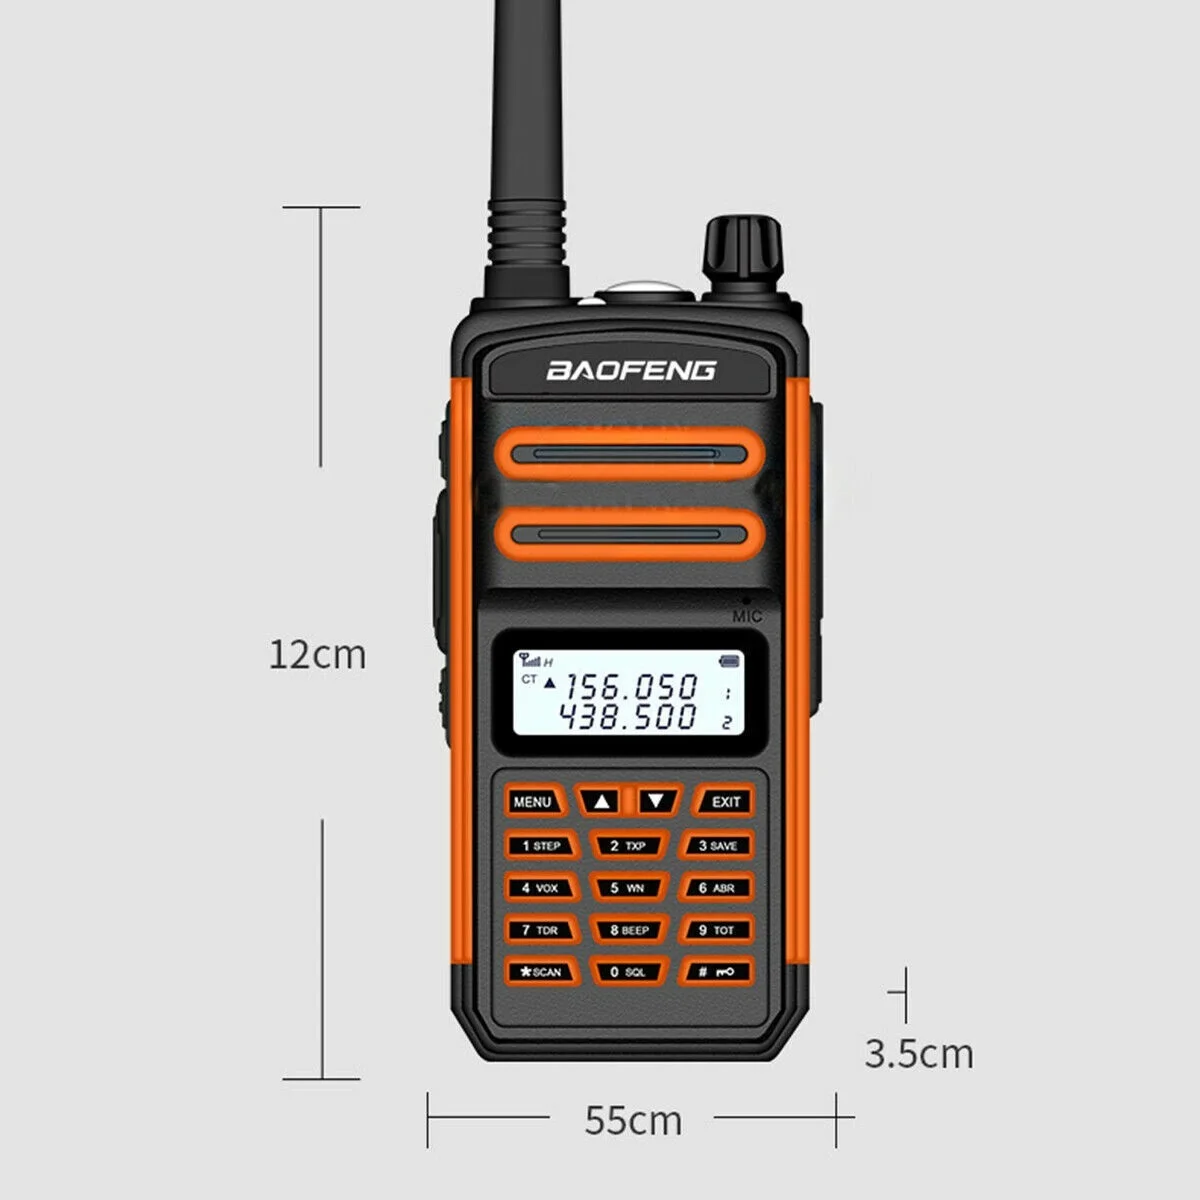 2 buc Baofeng BF-S5plus - TRIBAND watt 8 totală de 2 RADIO VHF/UHF136-174Mhz&400-520Mhz Dual Band Două fel de radio scanner de poliție1